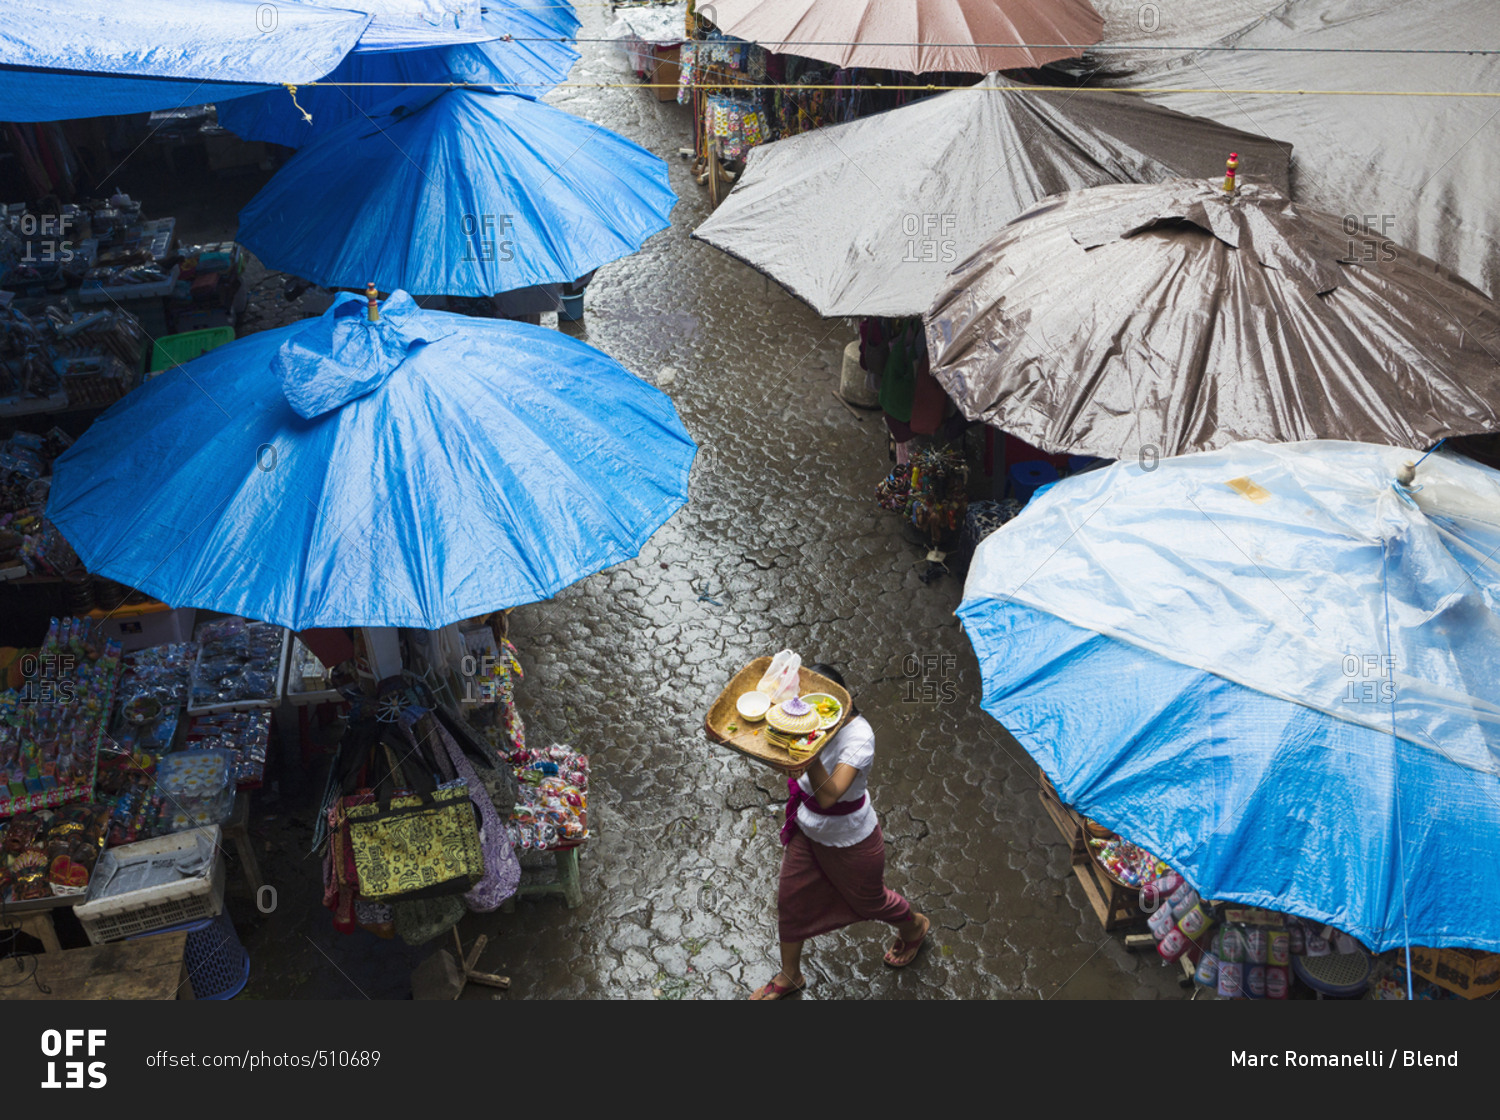 Rain falling over tarps and awnings of market stalls, Ubud, Bali, Indonesia